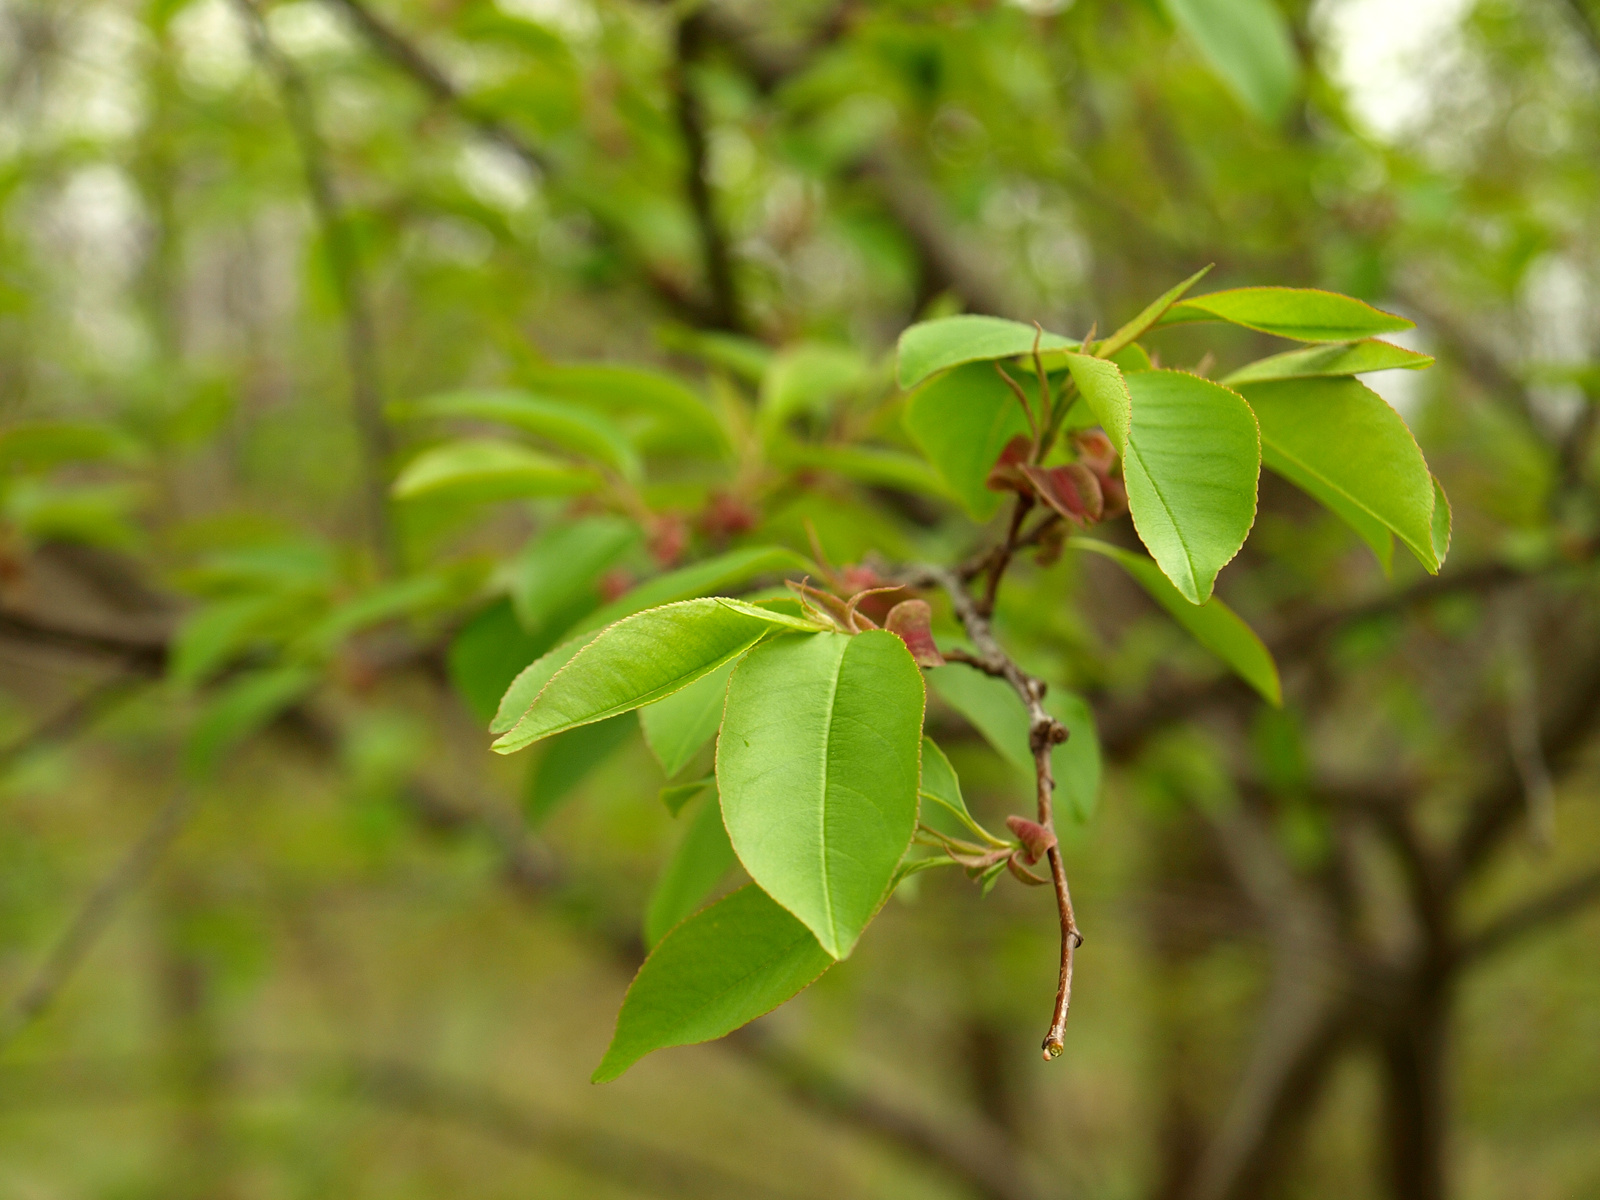 Kései meggy (Prunus serotinus) invazív faj